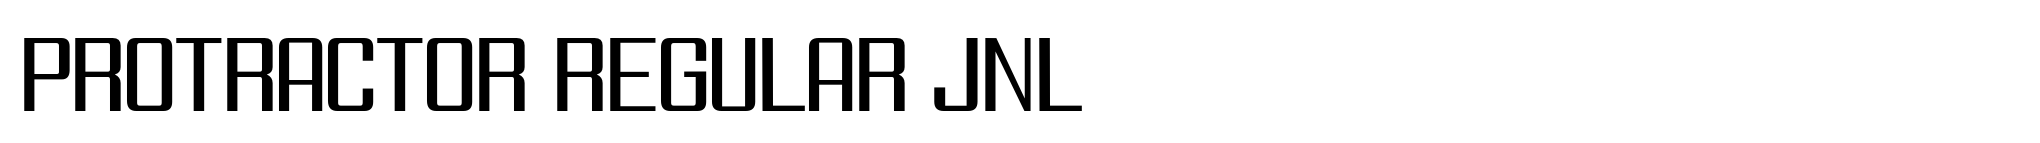 Protractor Regular JNL image